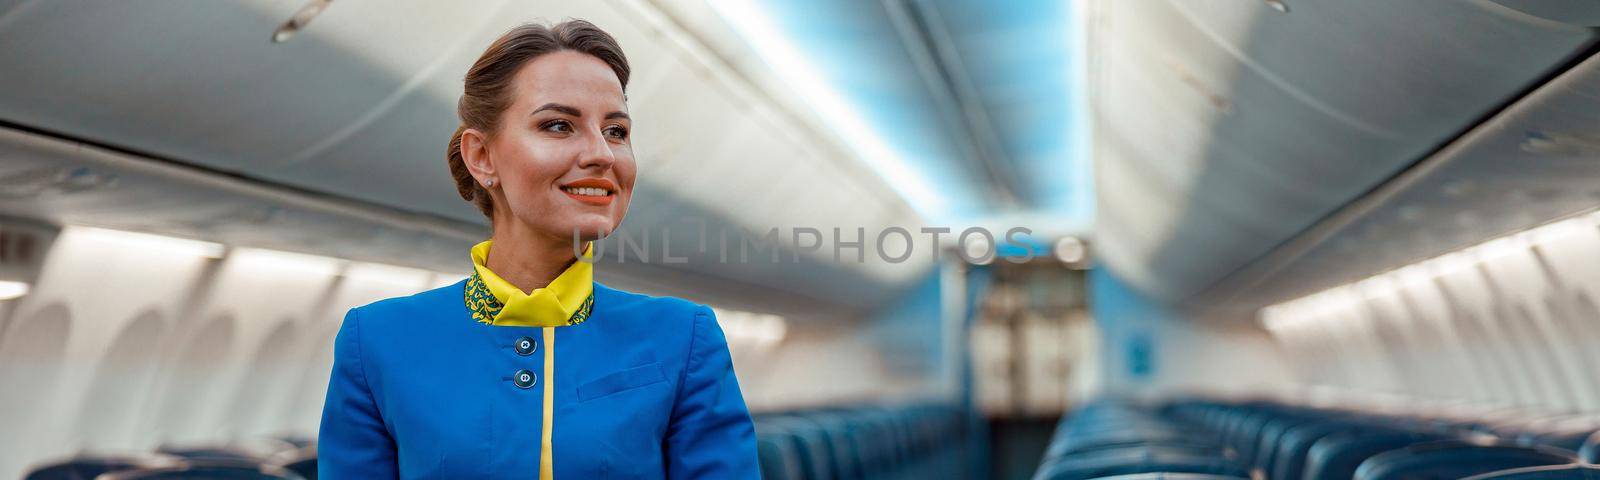 Joyful flight attendant standing in aircraft passenger cabin by Yaroslav_astakhov